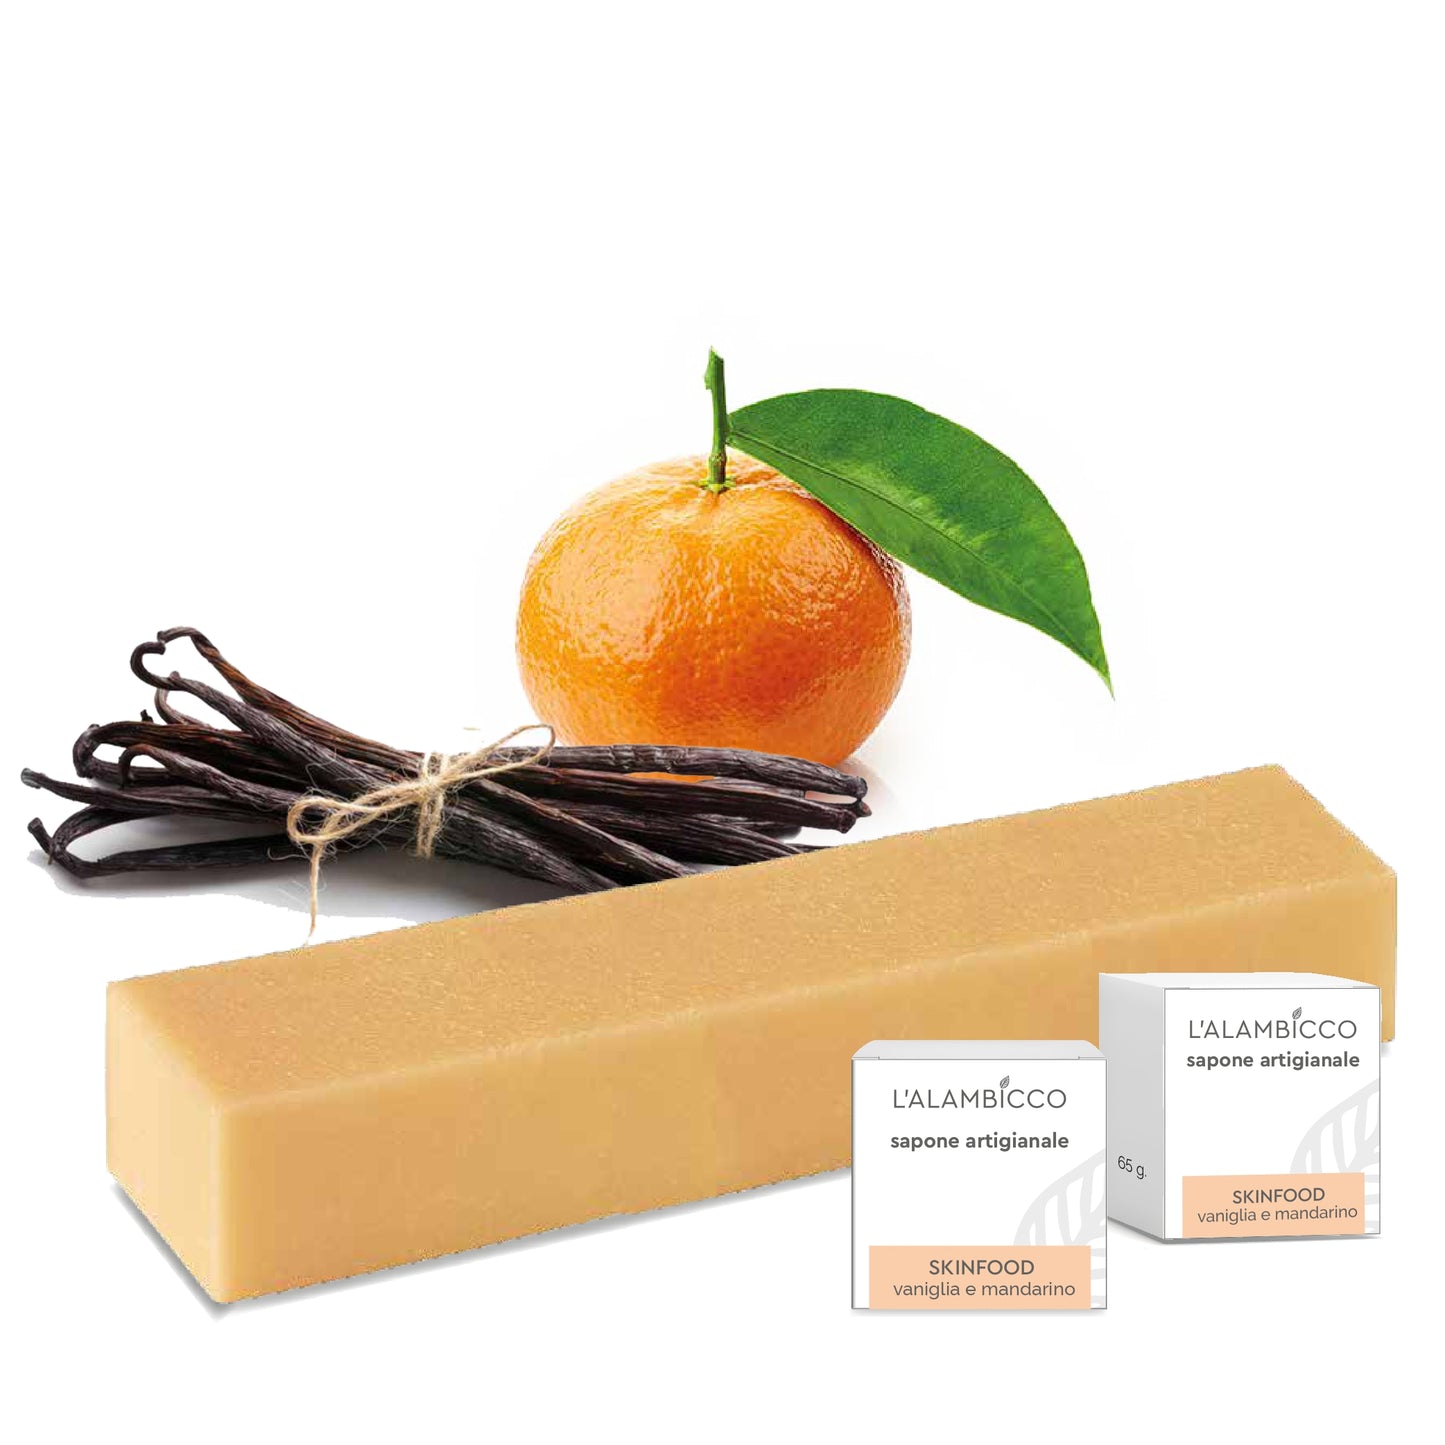 SAPONE VEGETALE SKINFOOD vaniglia e mandarino, barra 750